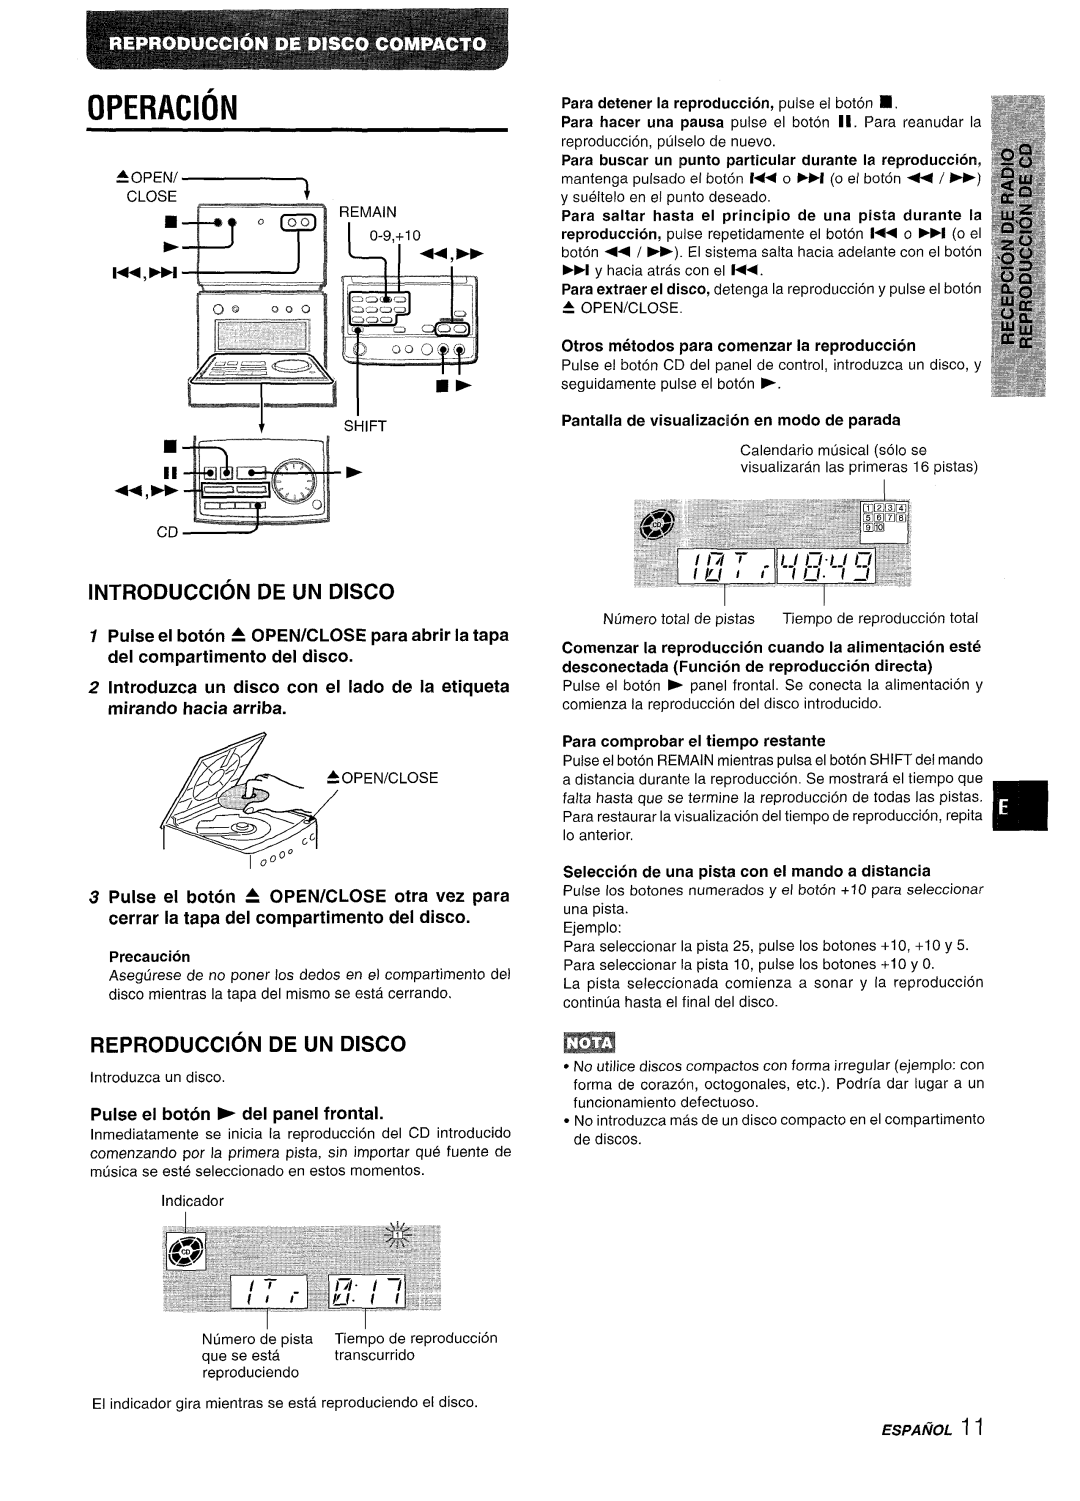 Aiwa XR-M70 Operacion, Introduction De Un Disco, Reproduction De Un Disco, Pulse el boton b del panel frontal, Precaution 